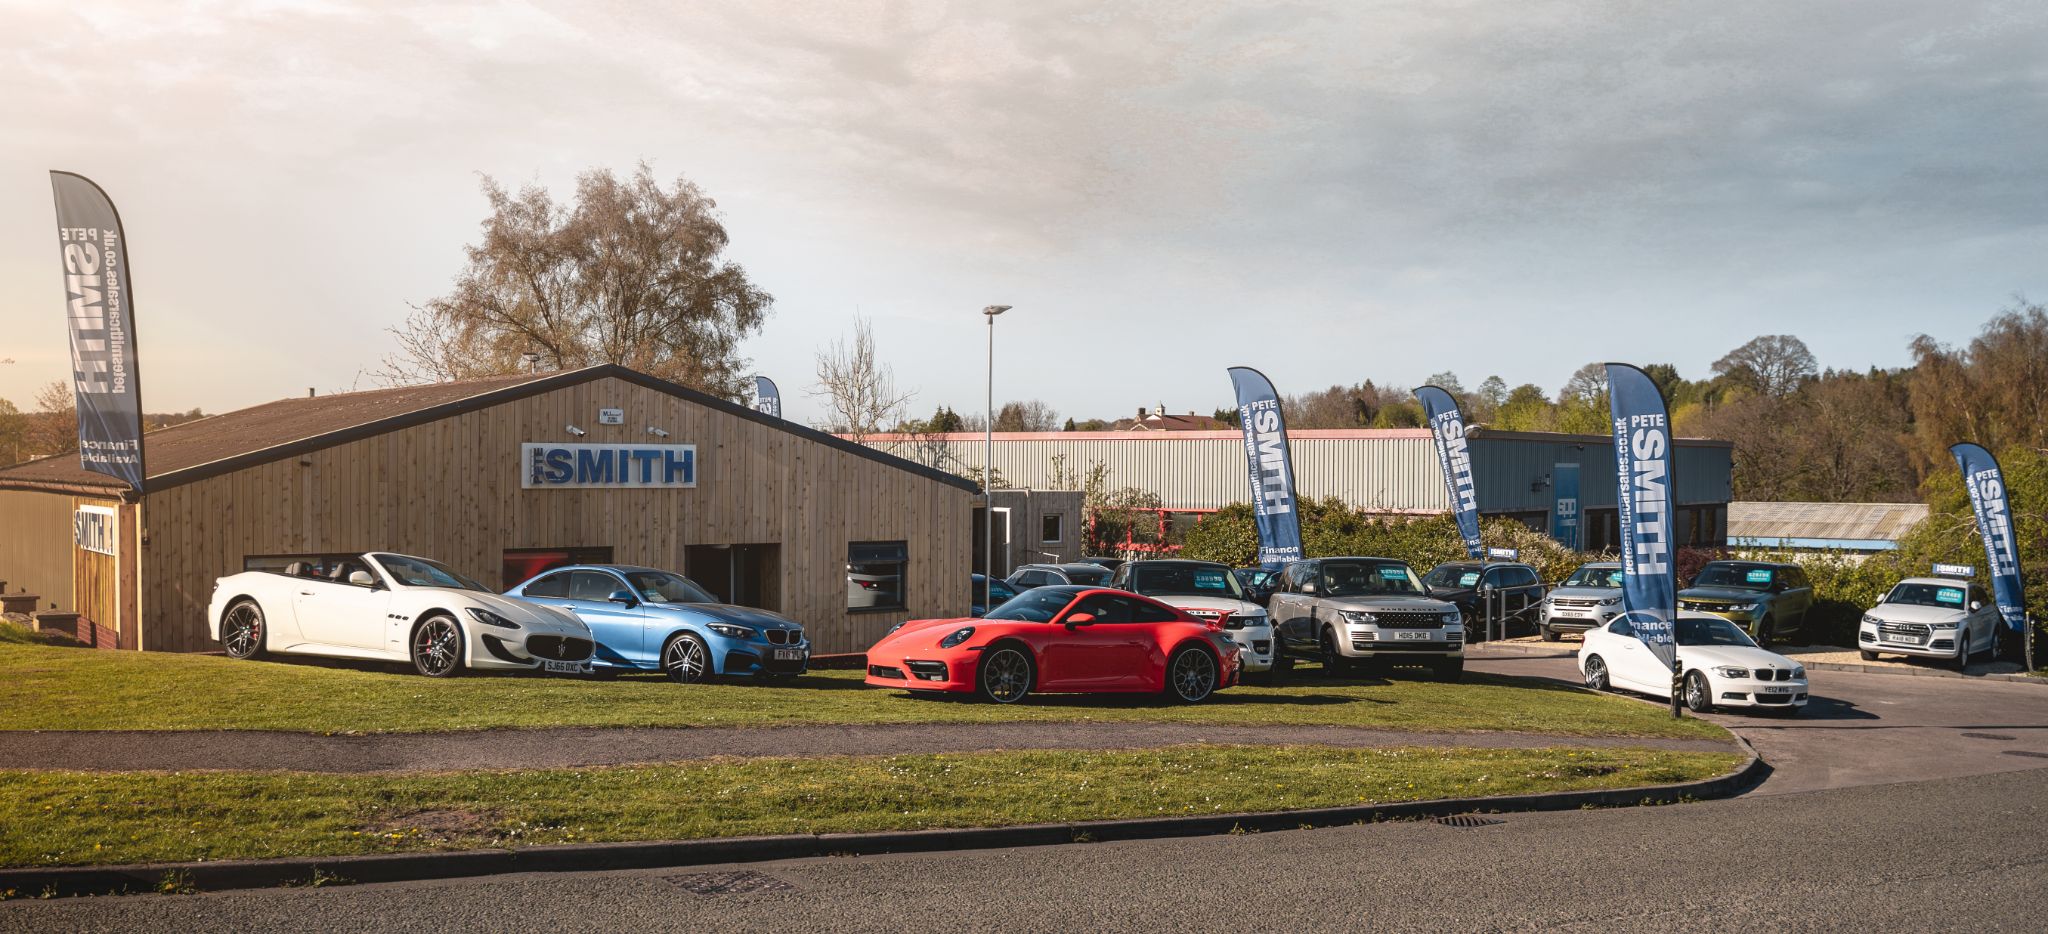 Pete Smith Coleford | Car dealership in Coleford | AutoTrader